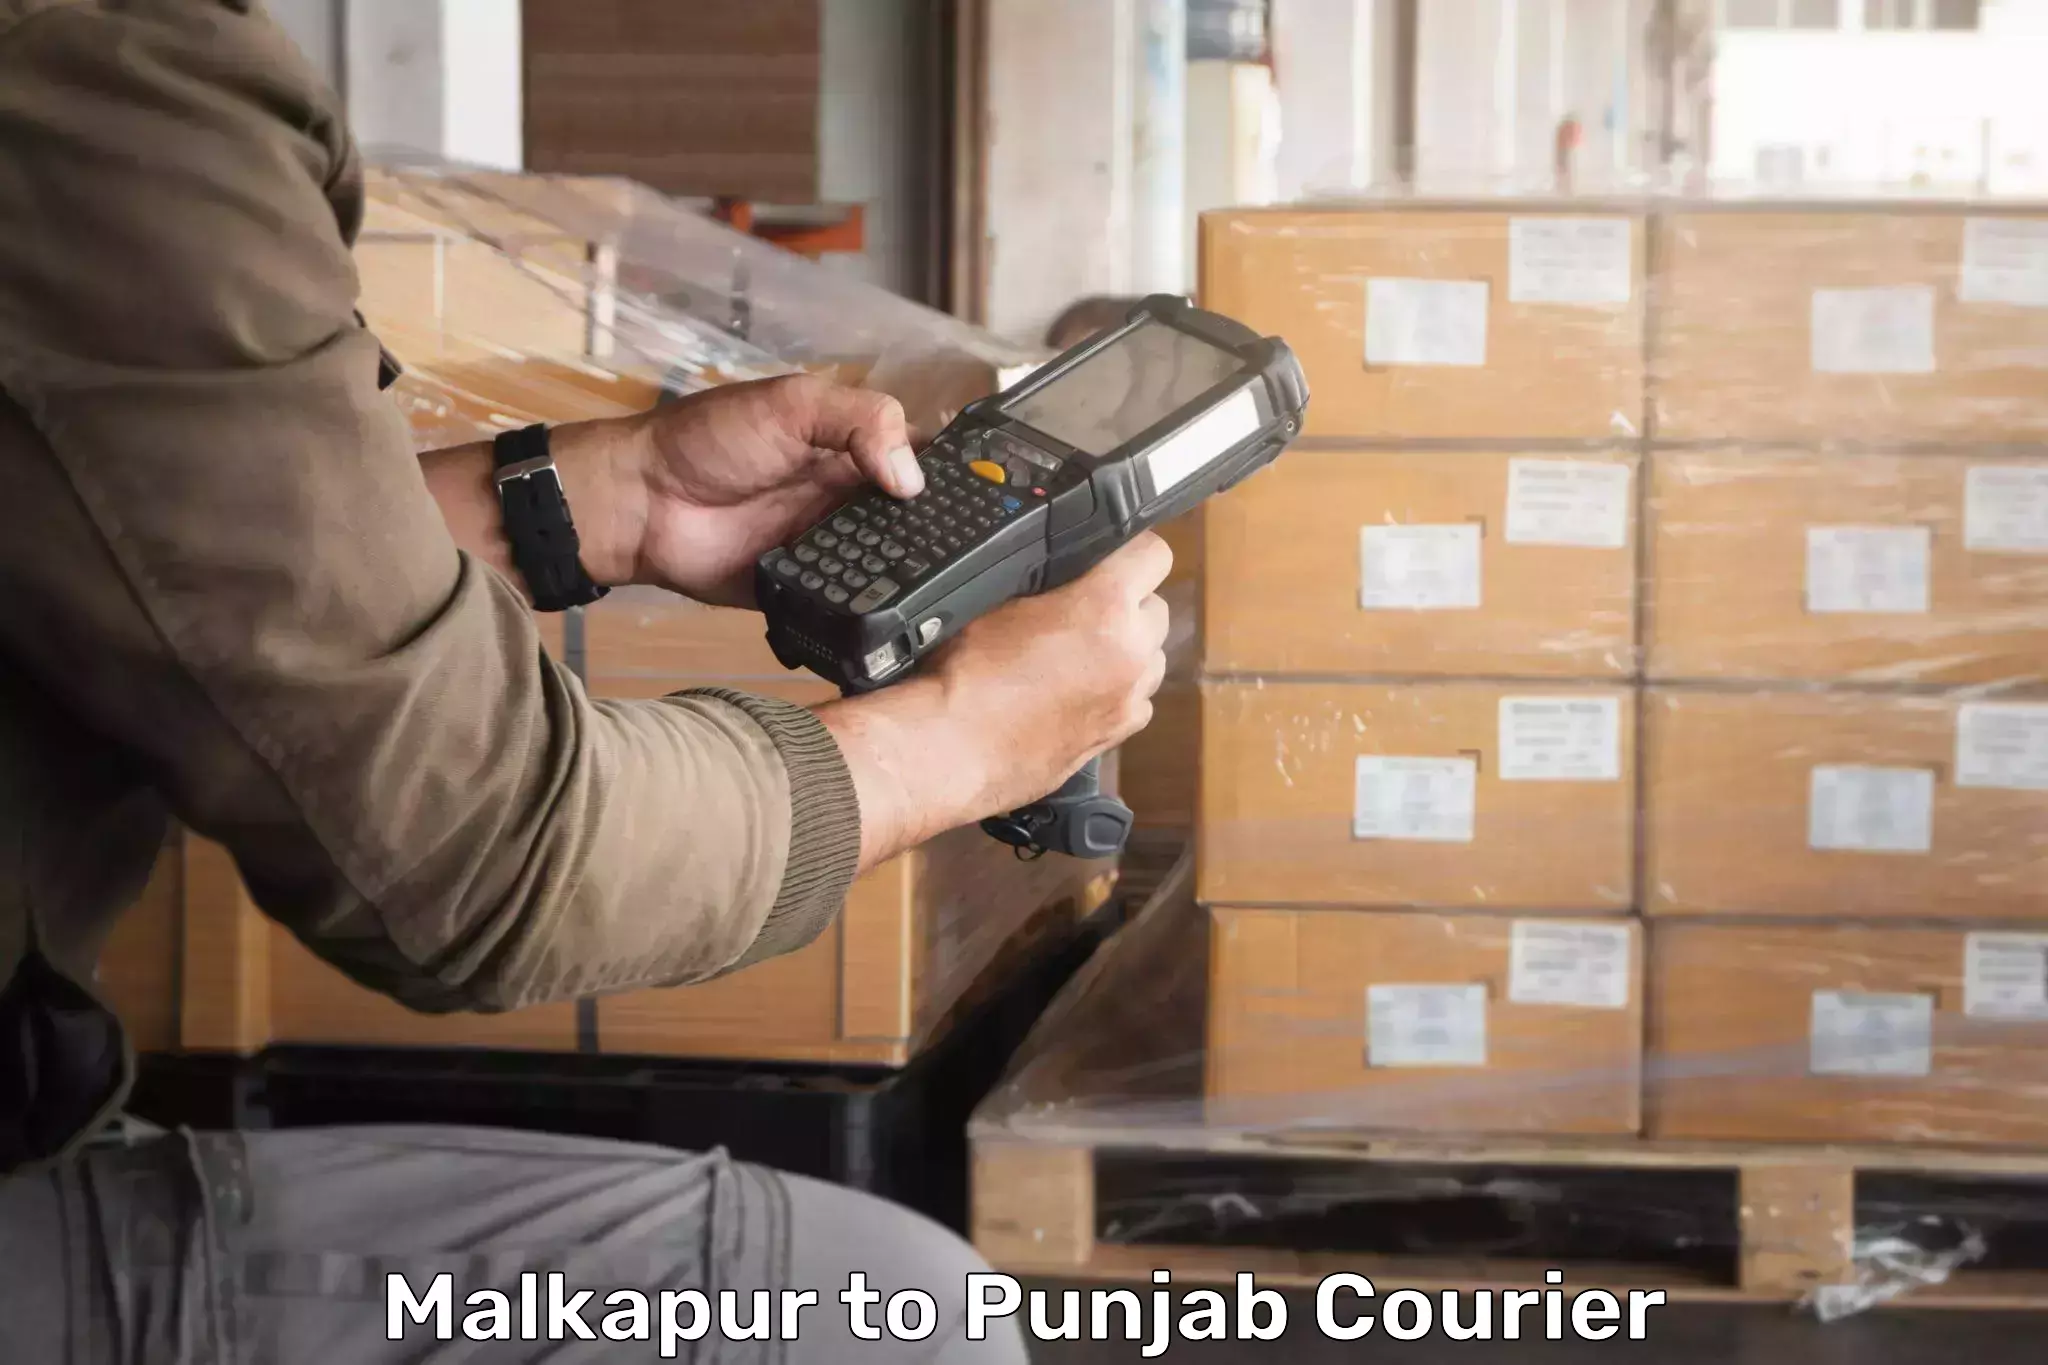 On-demand courier Malkapur to Kotkapura